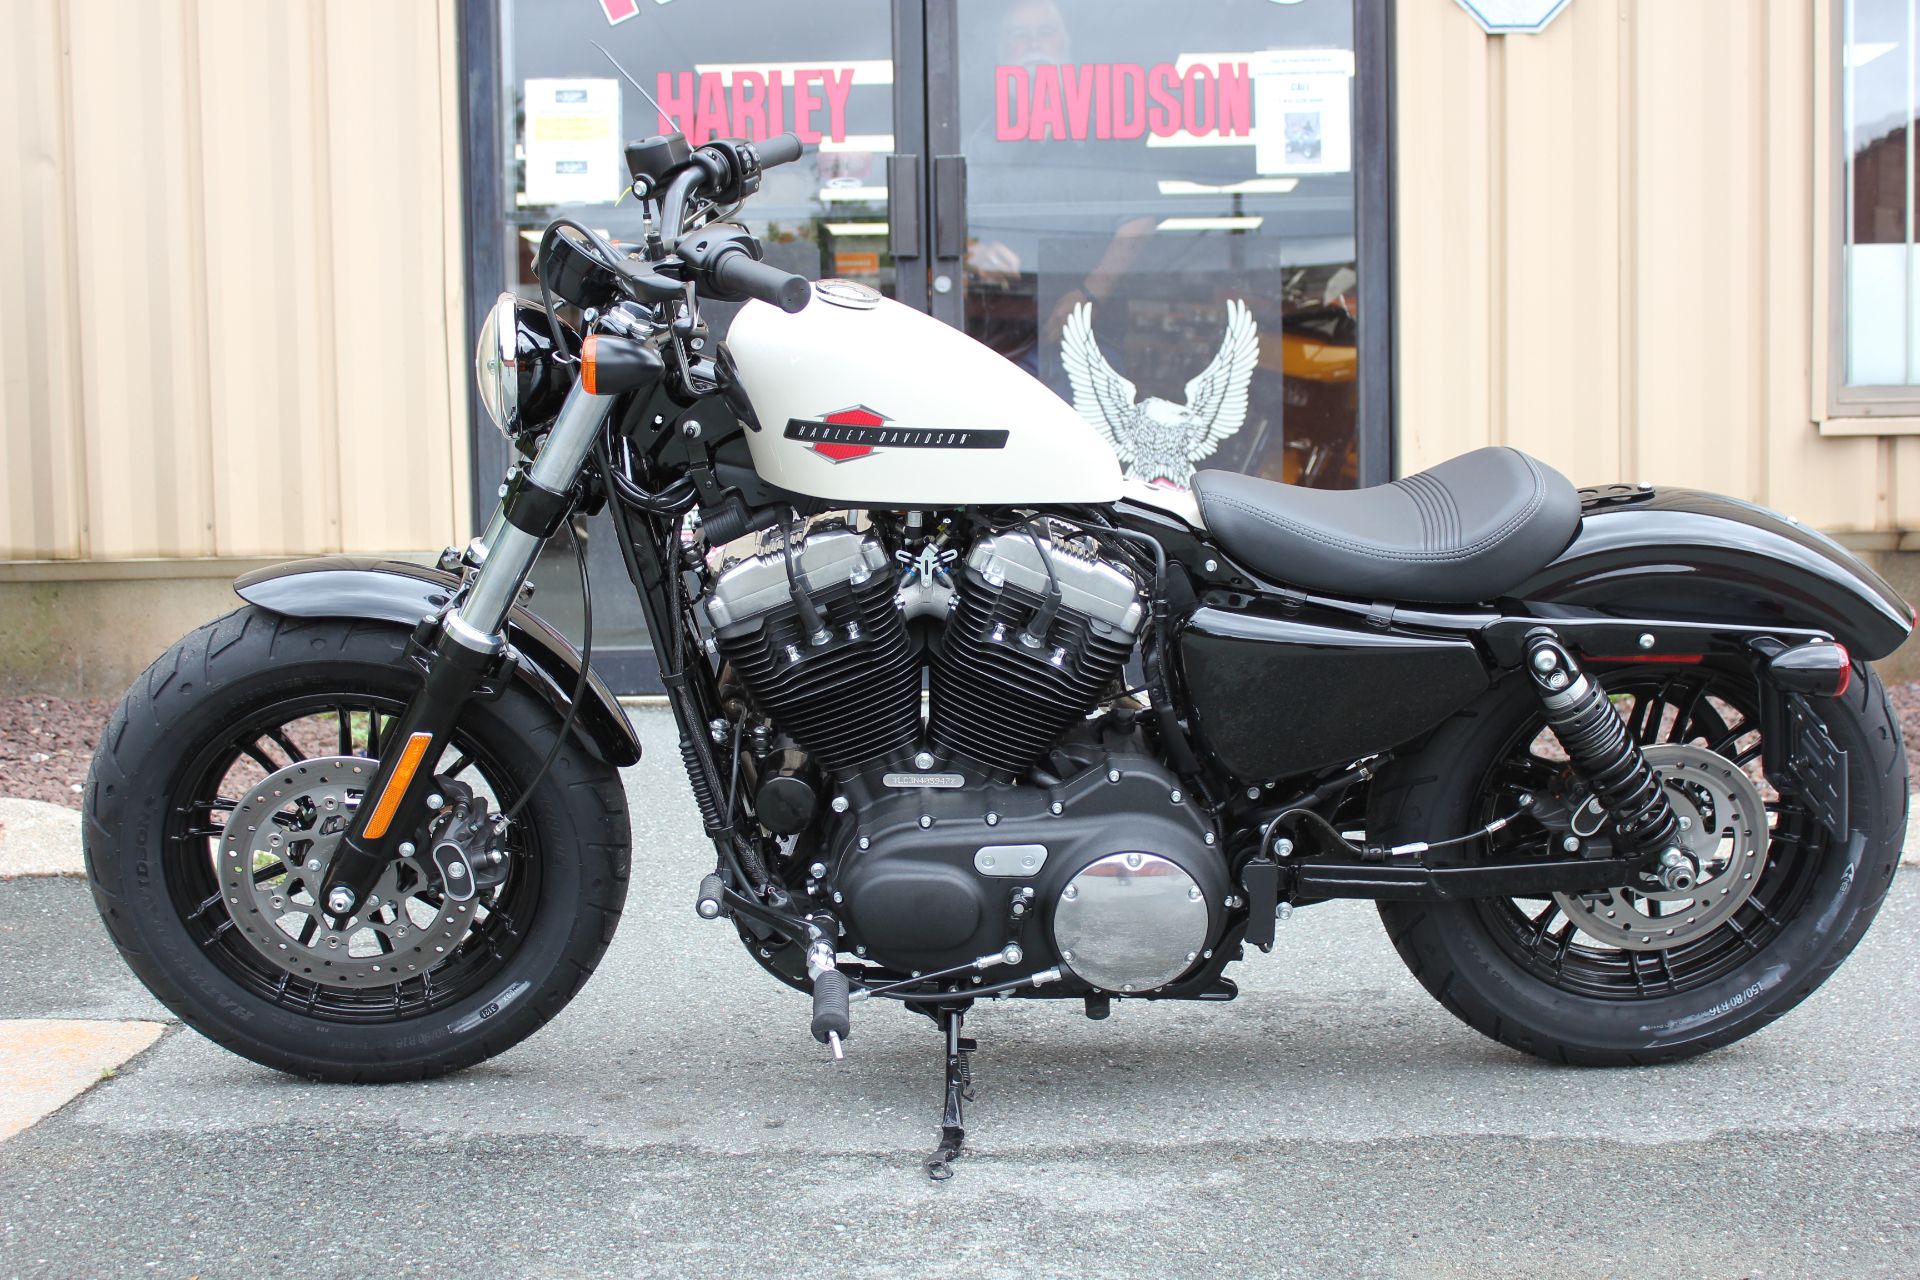 2022 Harley-Davidson Forty-Eight® in Pittsfield, Massachusetts - Photo 1